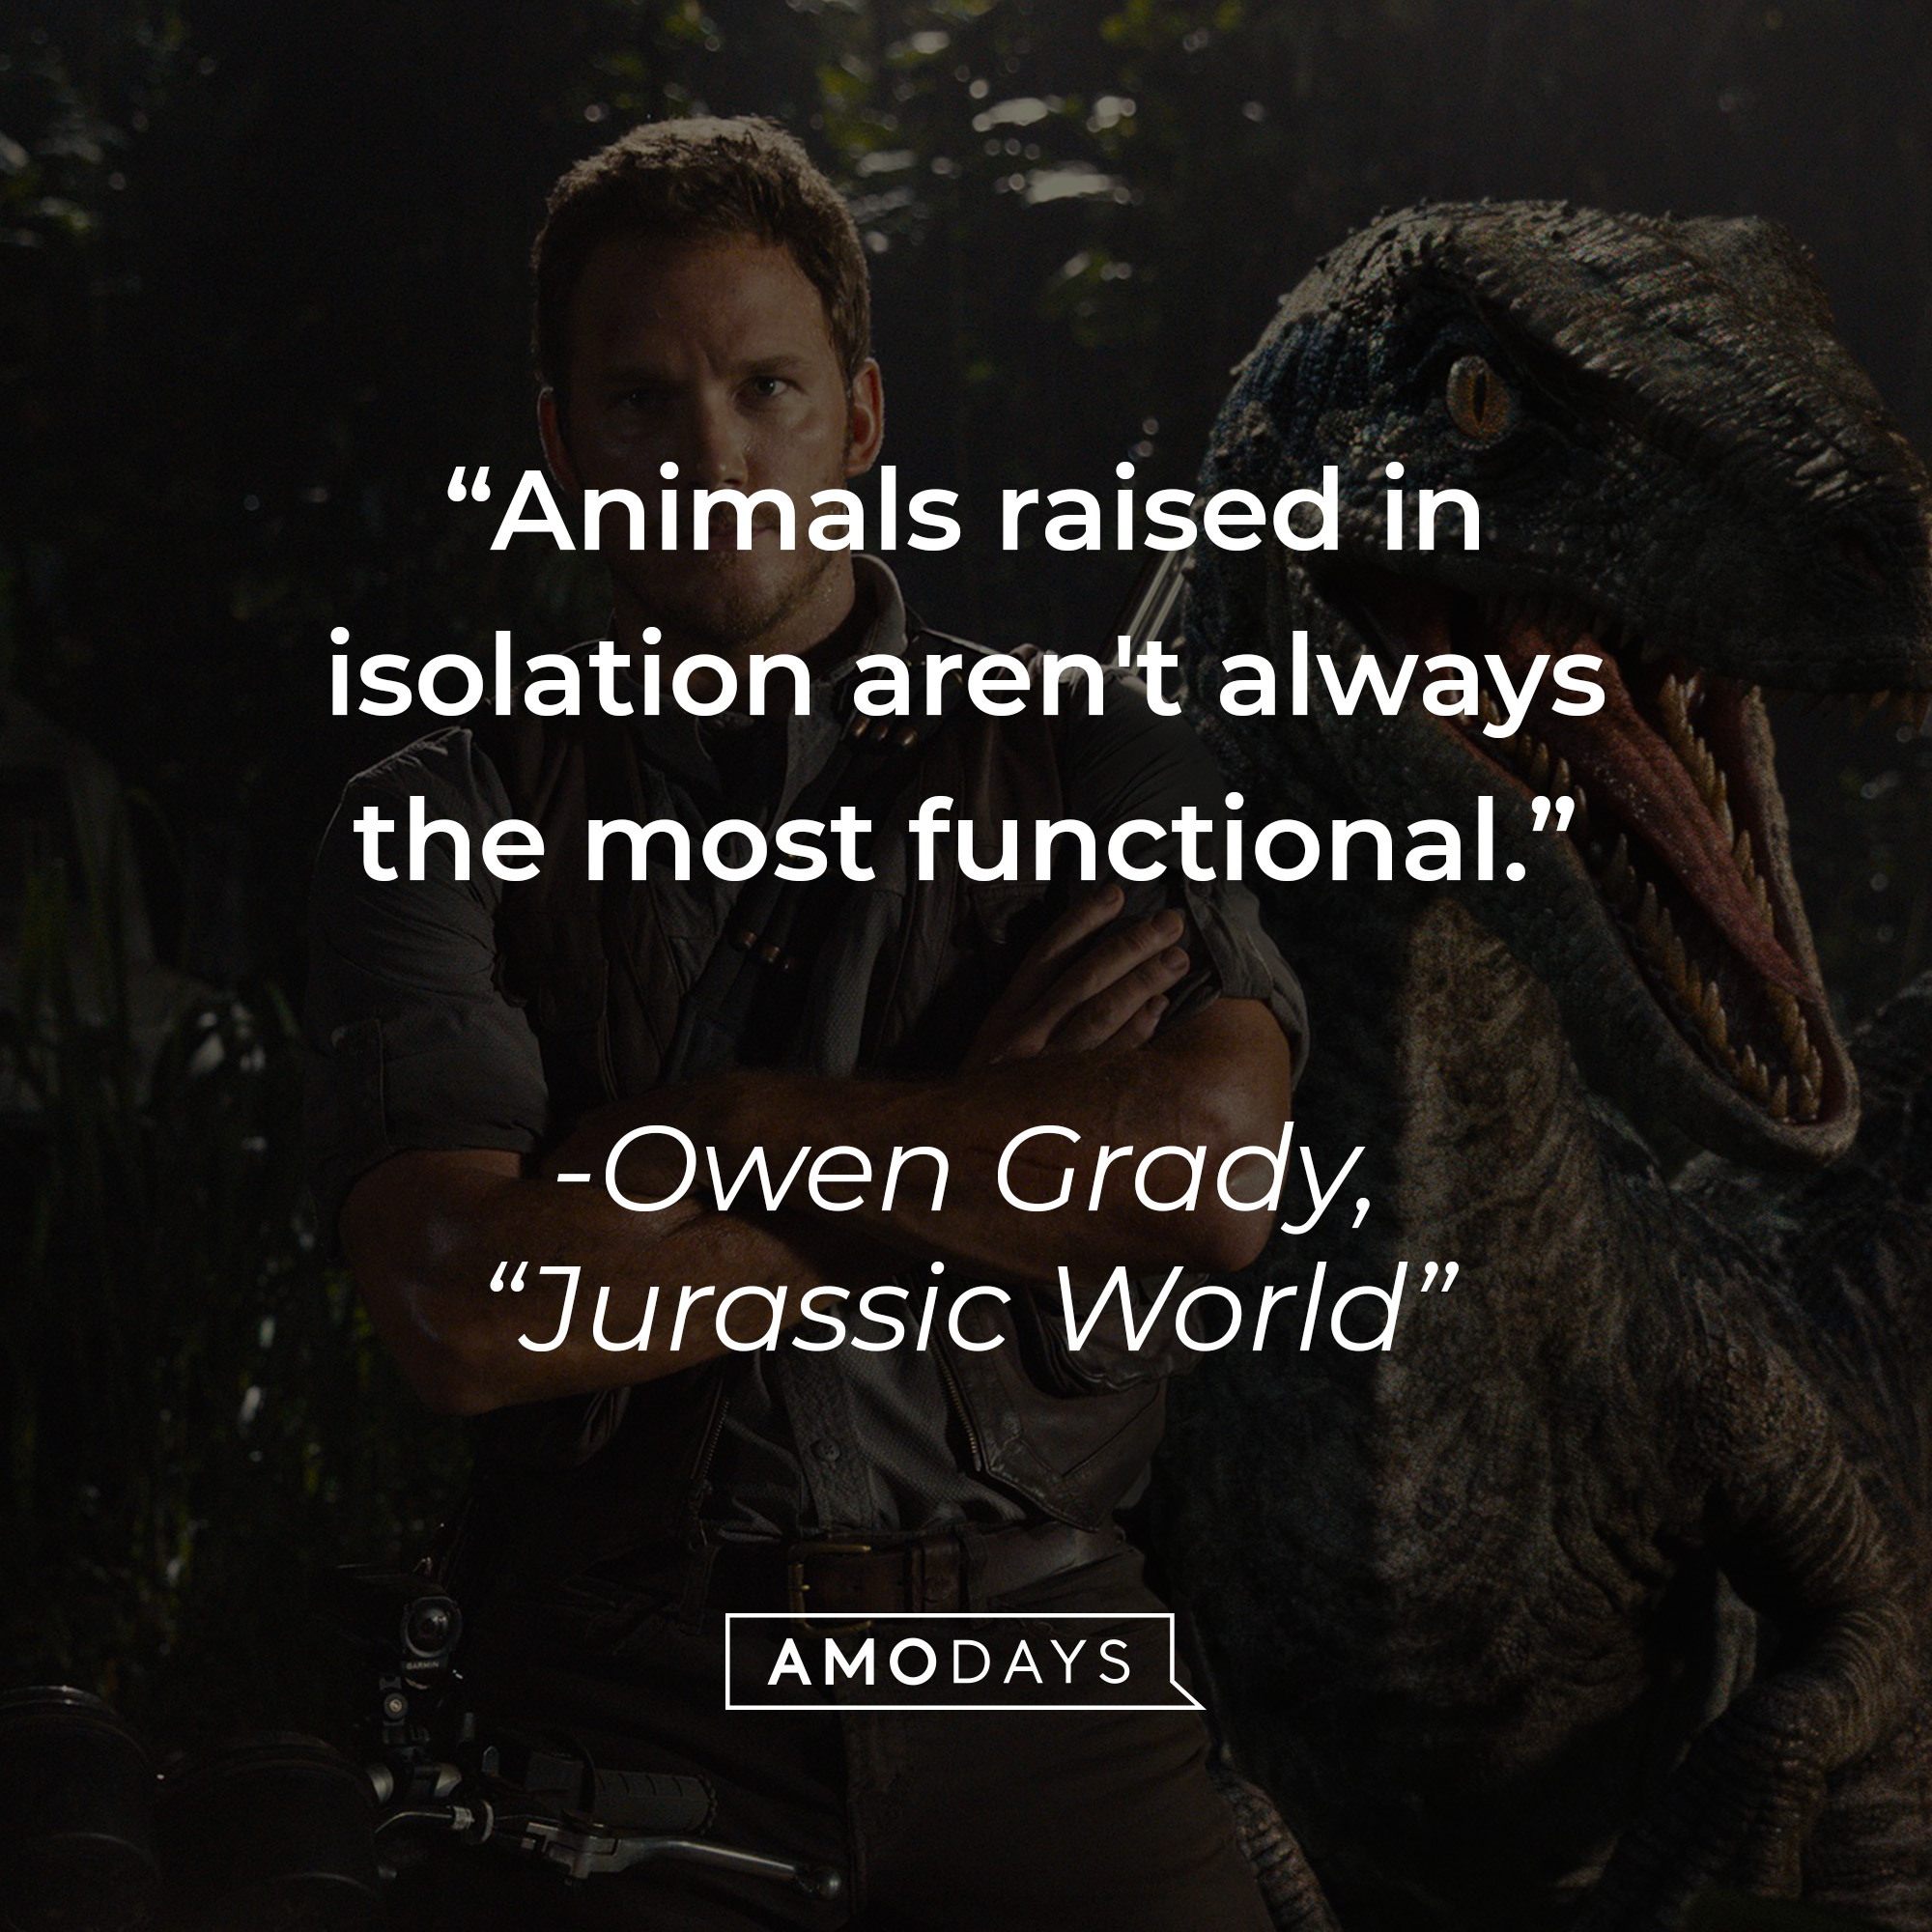 Owen Grady's quote: "Animals raised in isolation aren't always the most functional." | Source: facebook.com/JurassicWorld